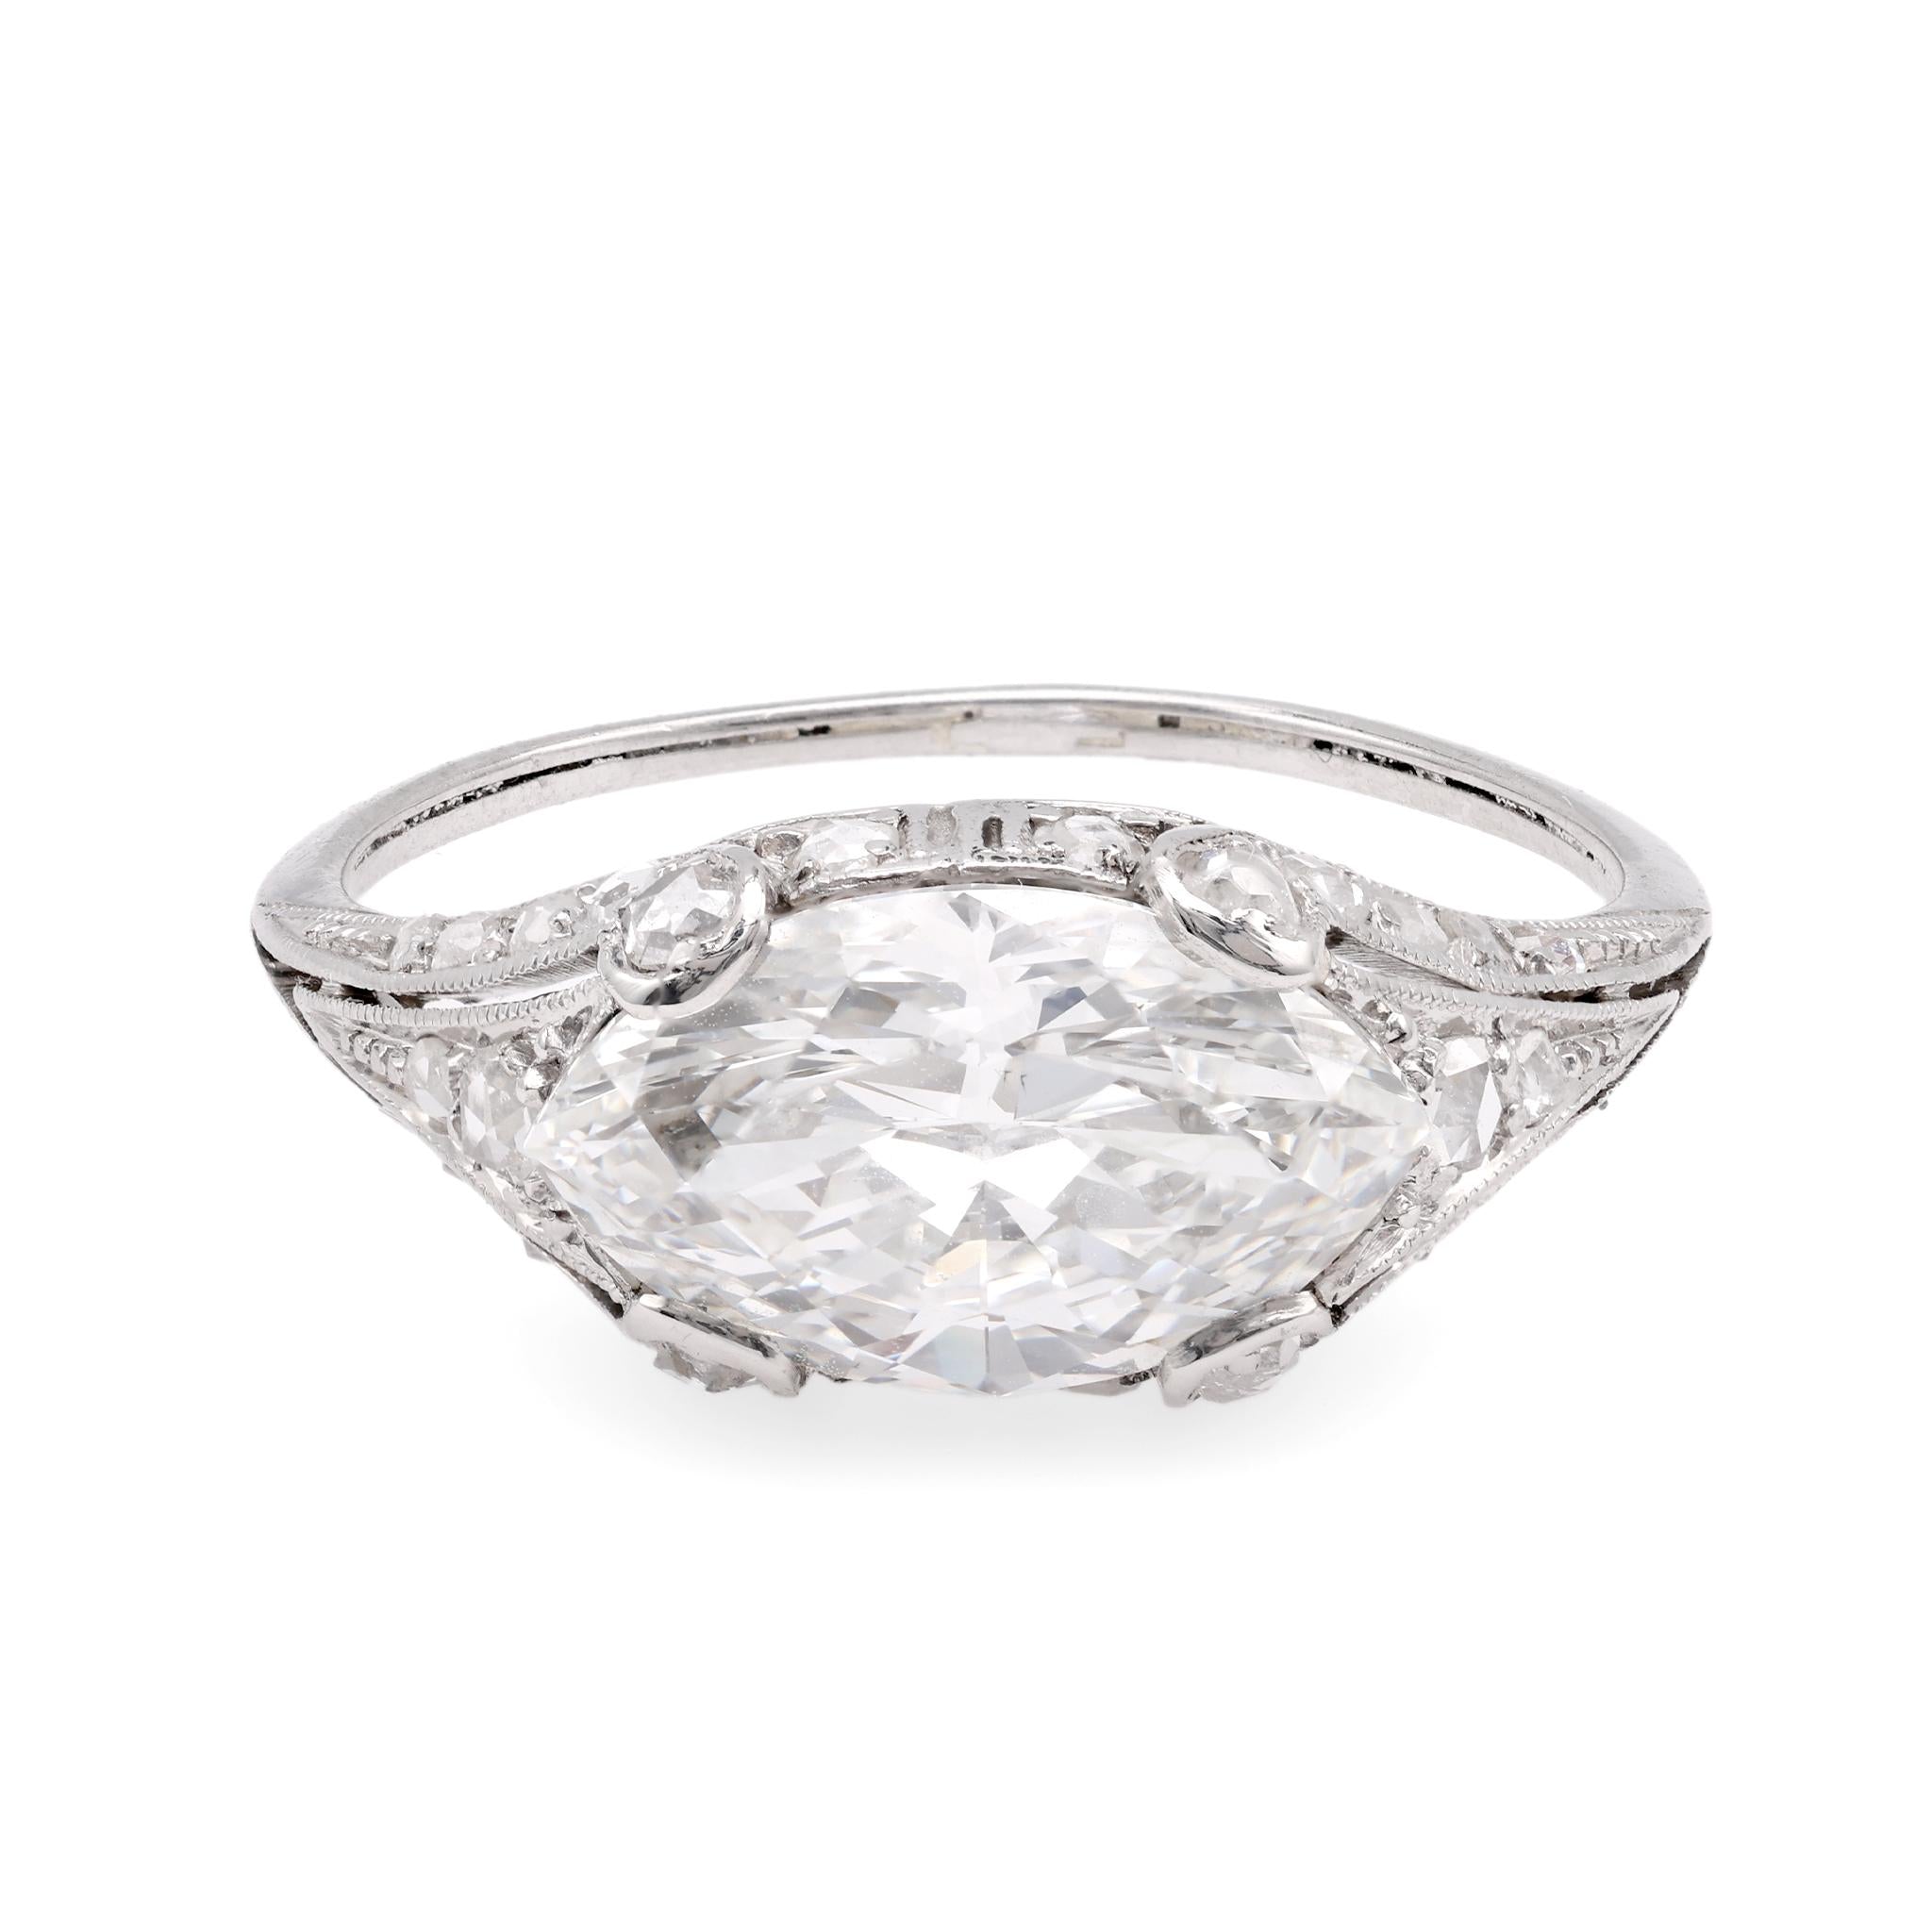 Edwardian GIA 2.25 Carat Marquise Cut Diamond Platinum Engagement Ring  Jack Weir & Sons   